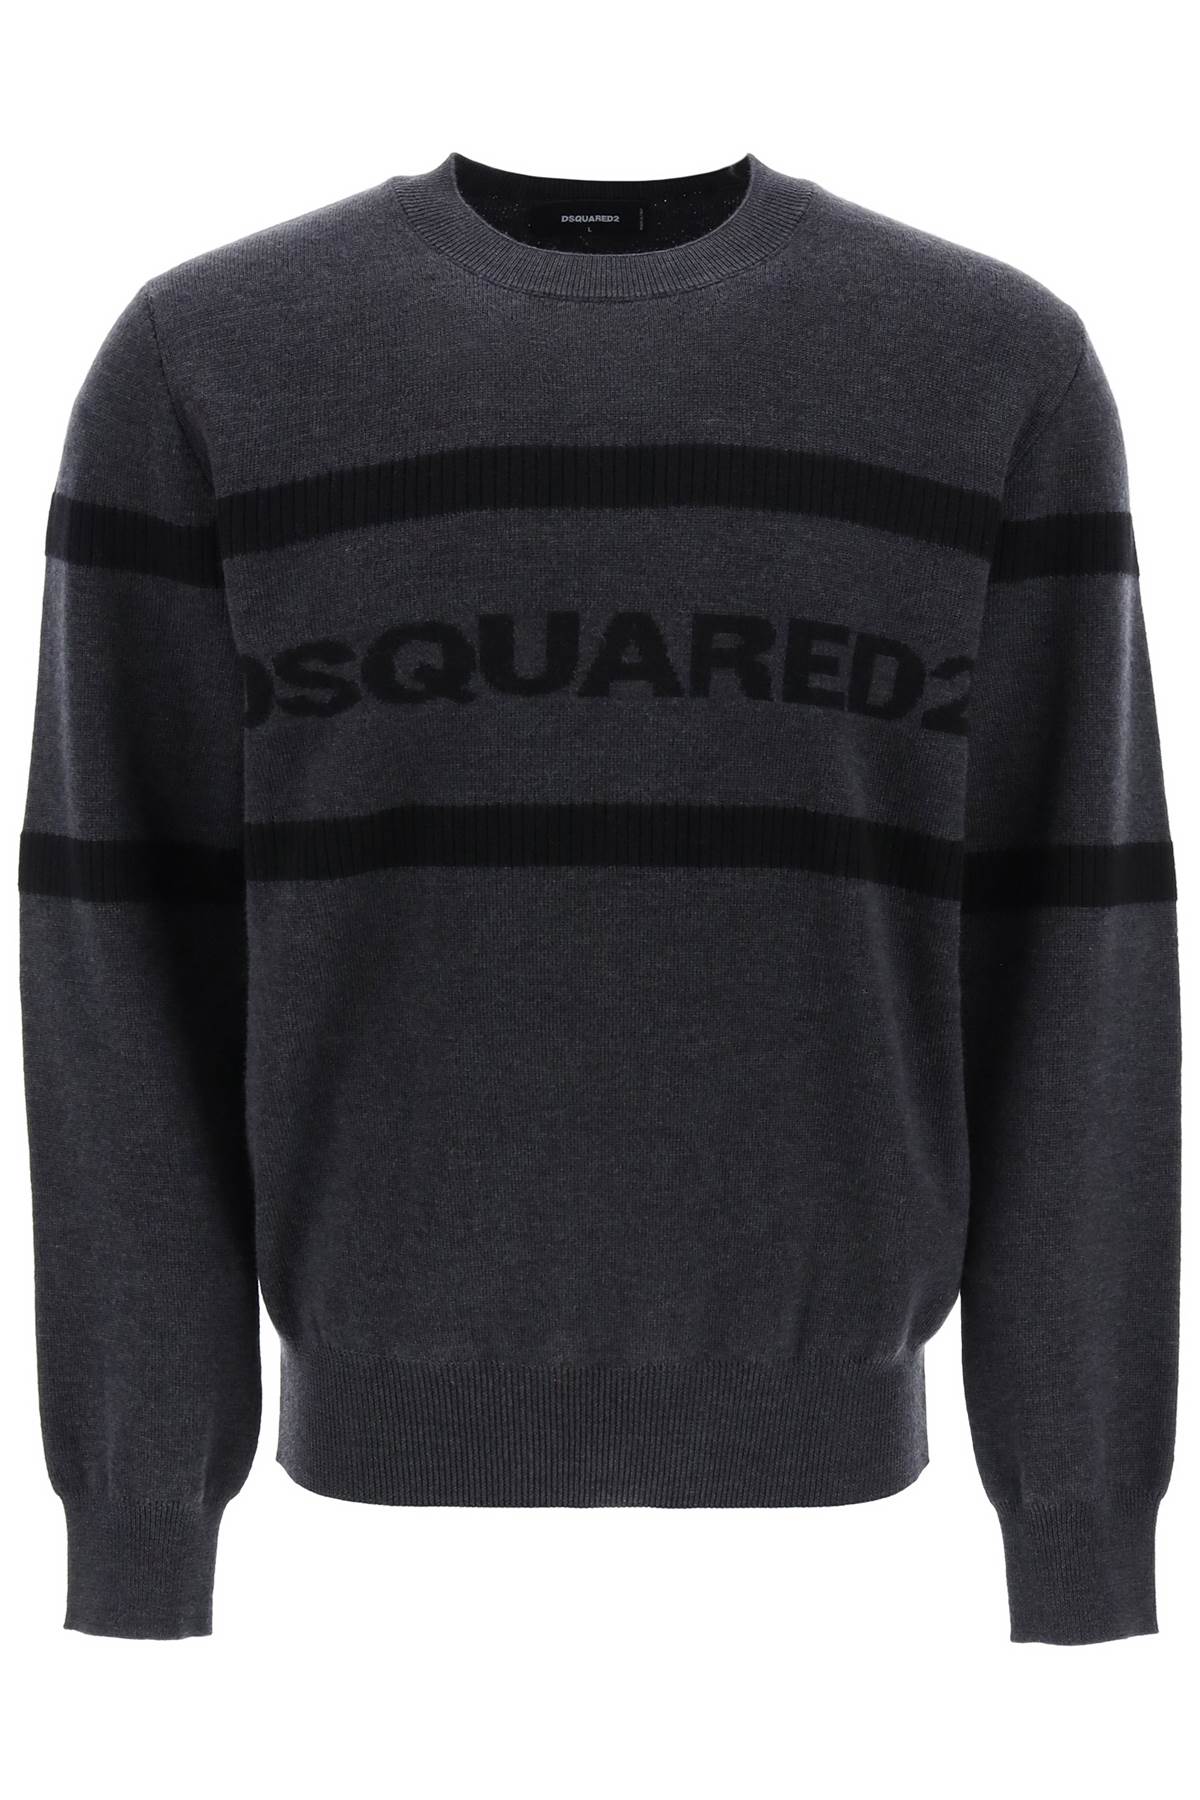 Dsquared2 jacquard logo lettering sweater-0